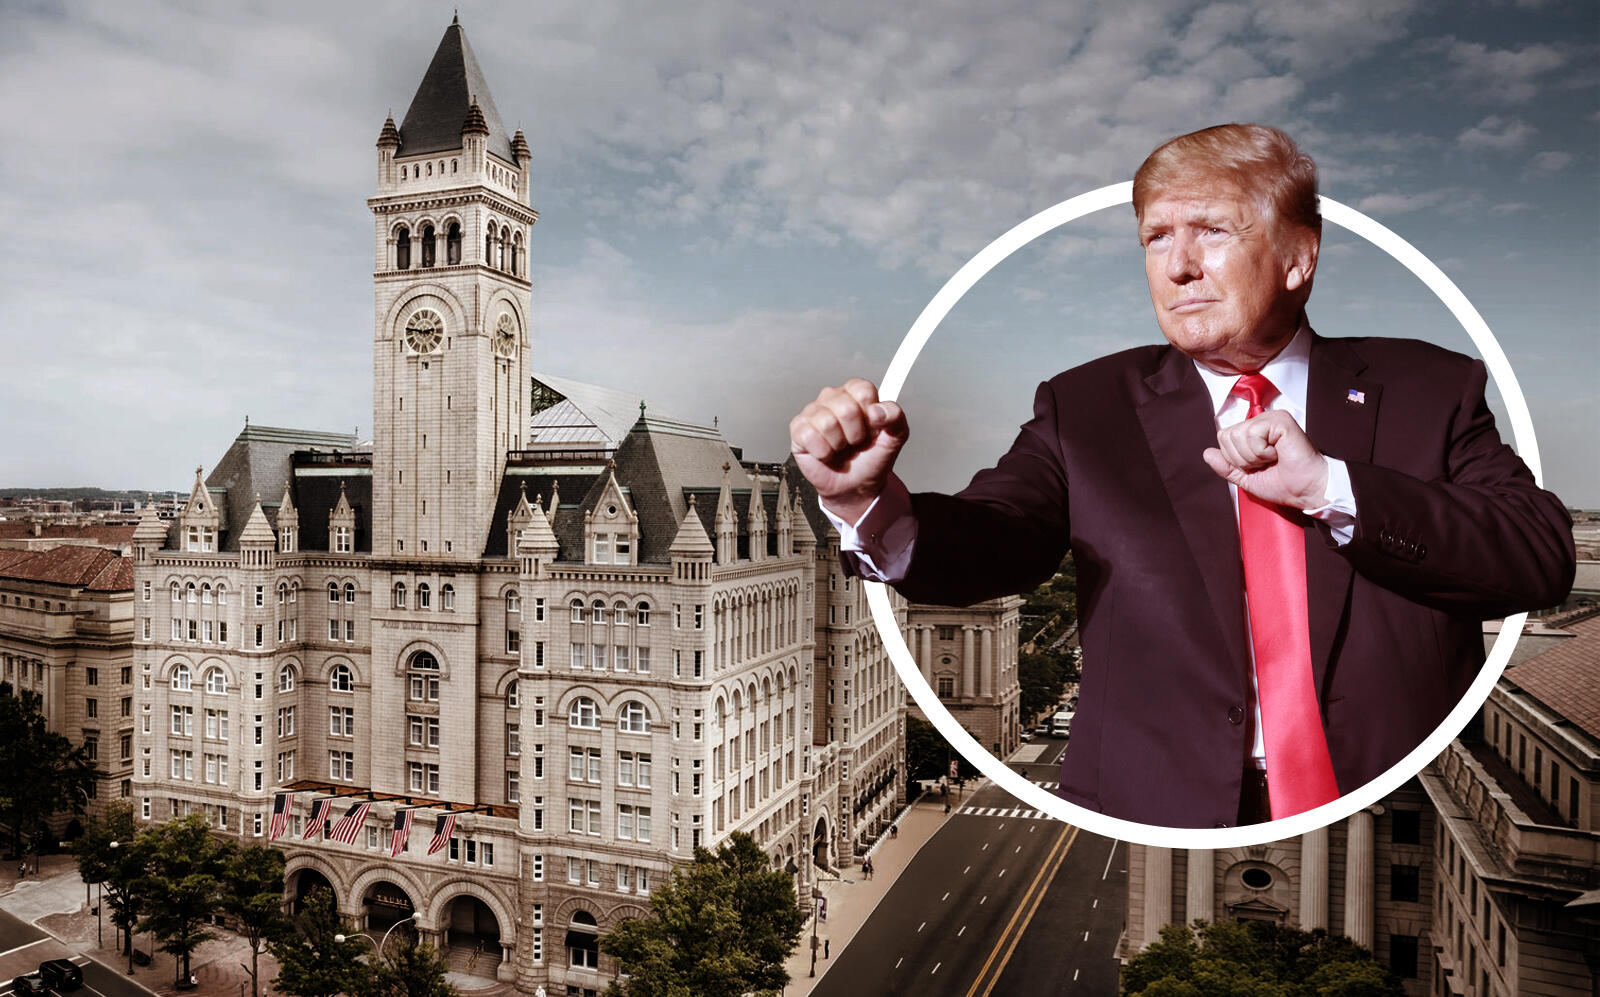 Trump International Hotel D.C. and Donald Trump (Getty, Trump Hotels)